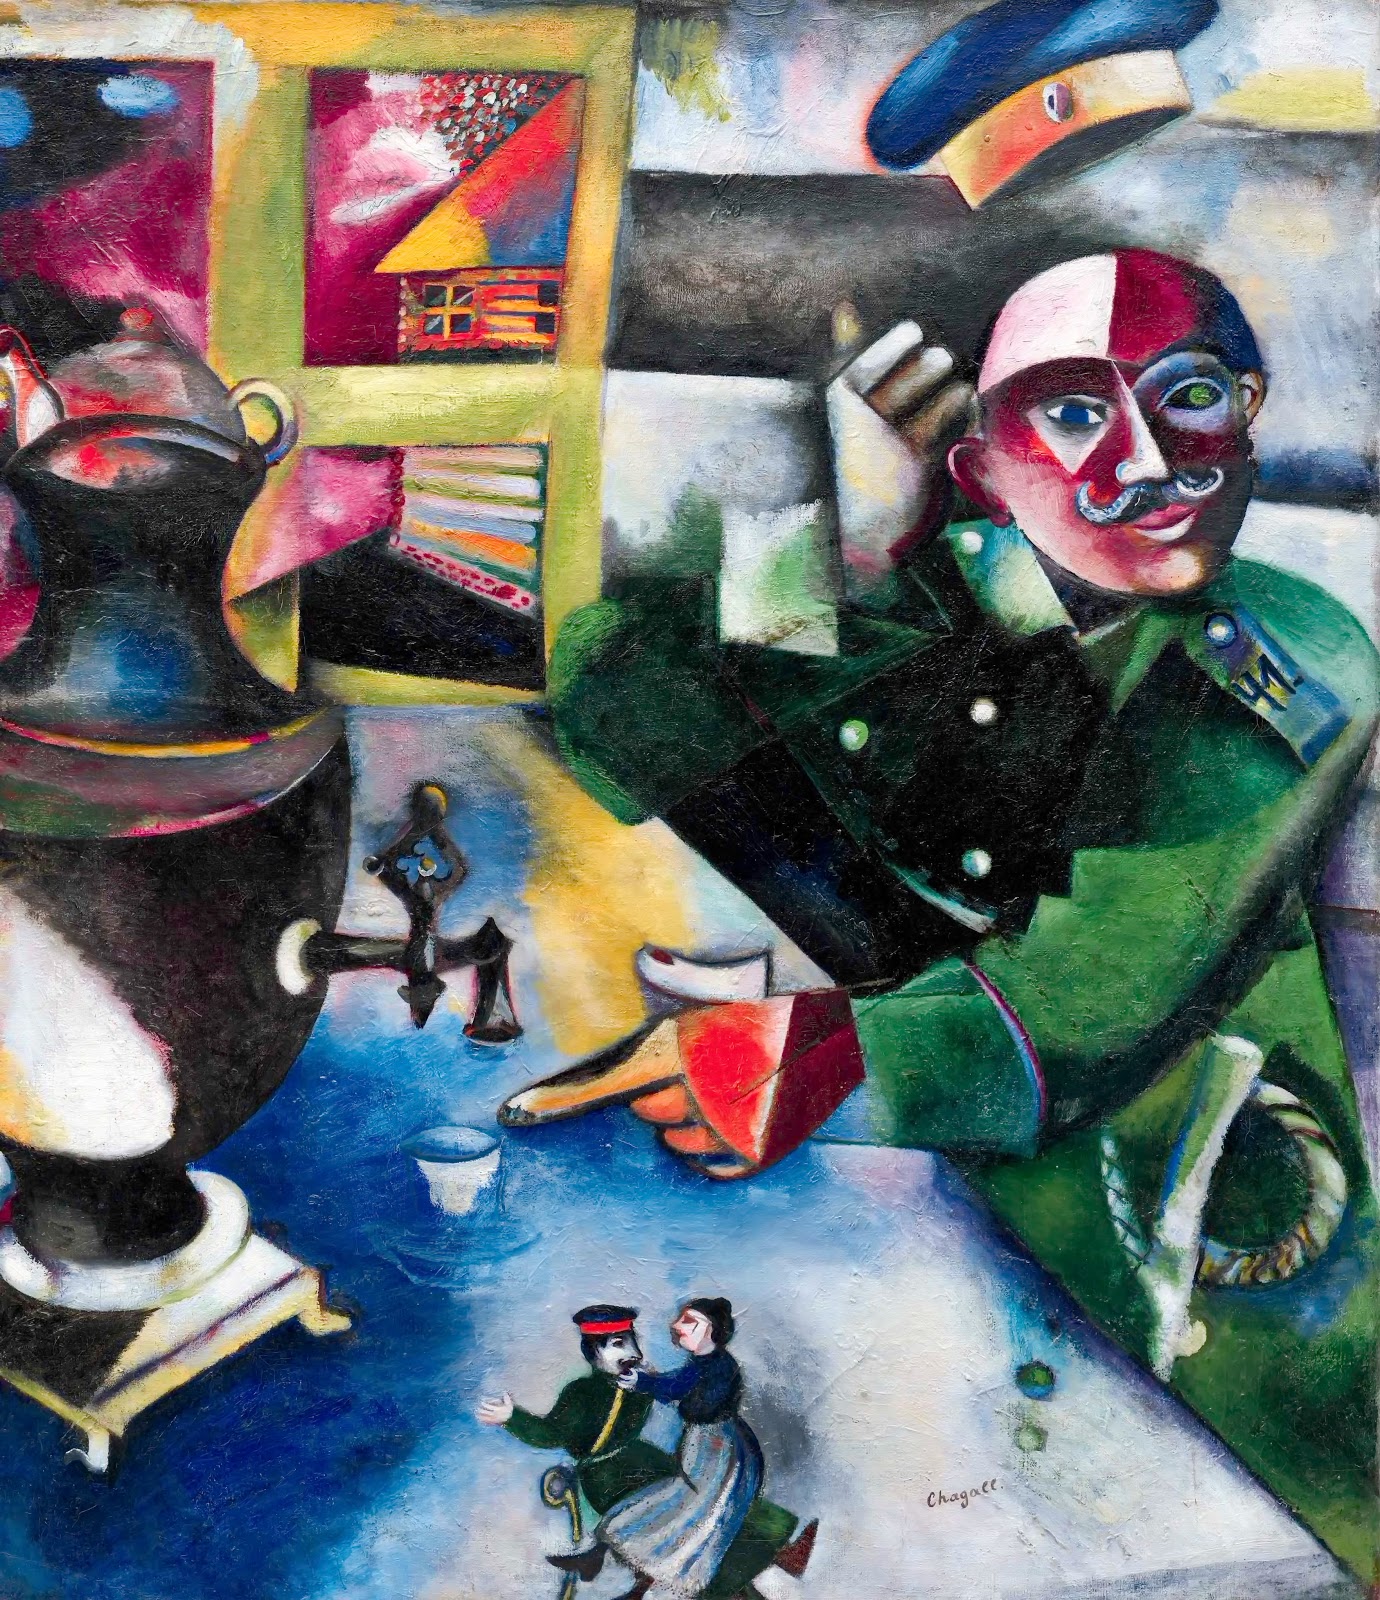 Marc+Chagall-1887-1985 (310).jpg